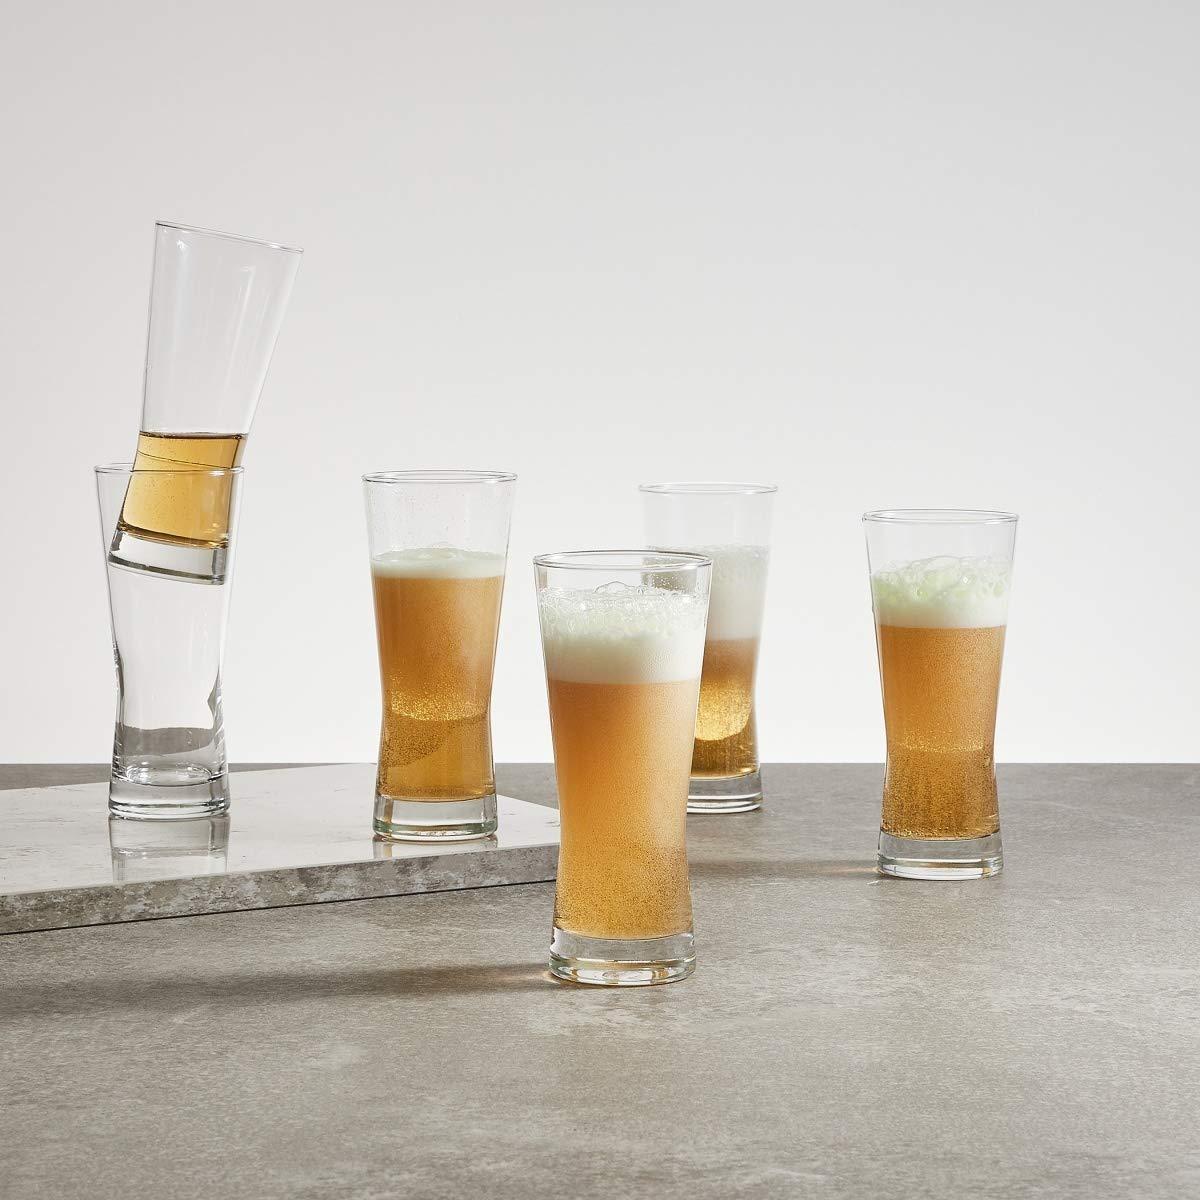 Ocean Metropolitan Beer Glass - 440ml (6 pcs) - Happyware Home Pvt Ltd